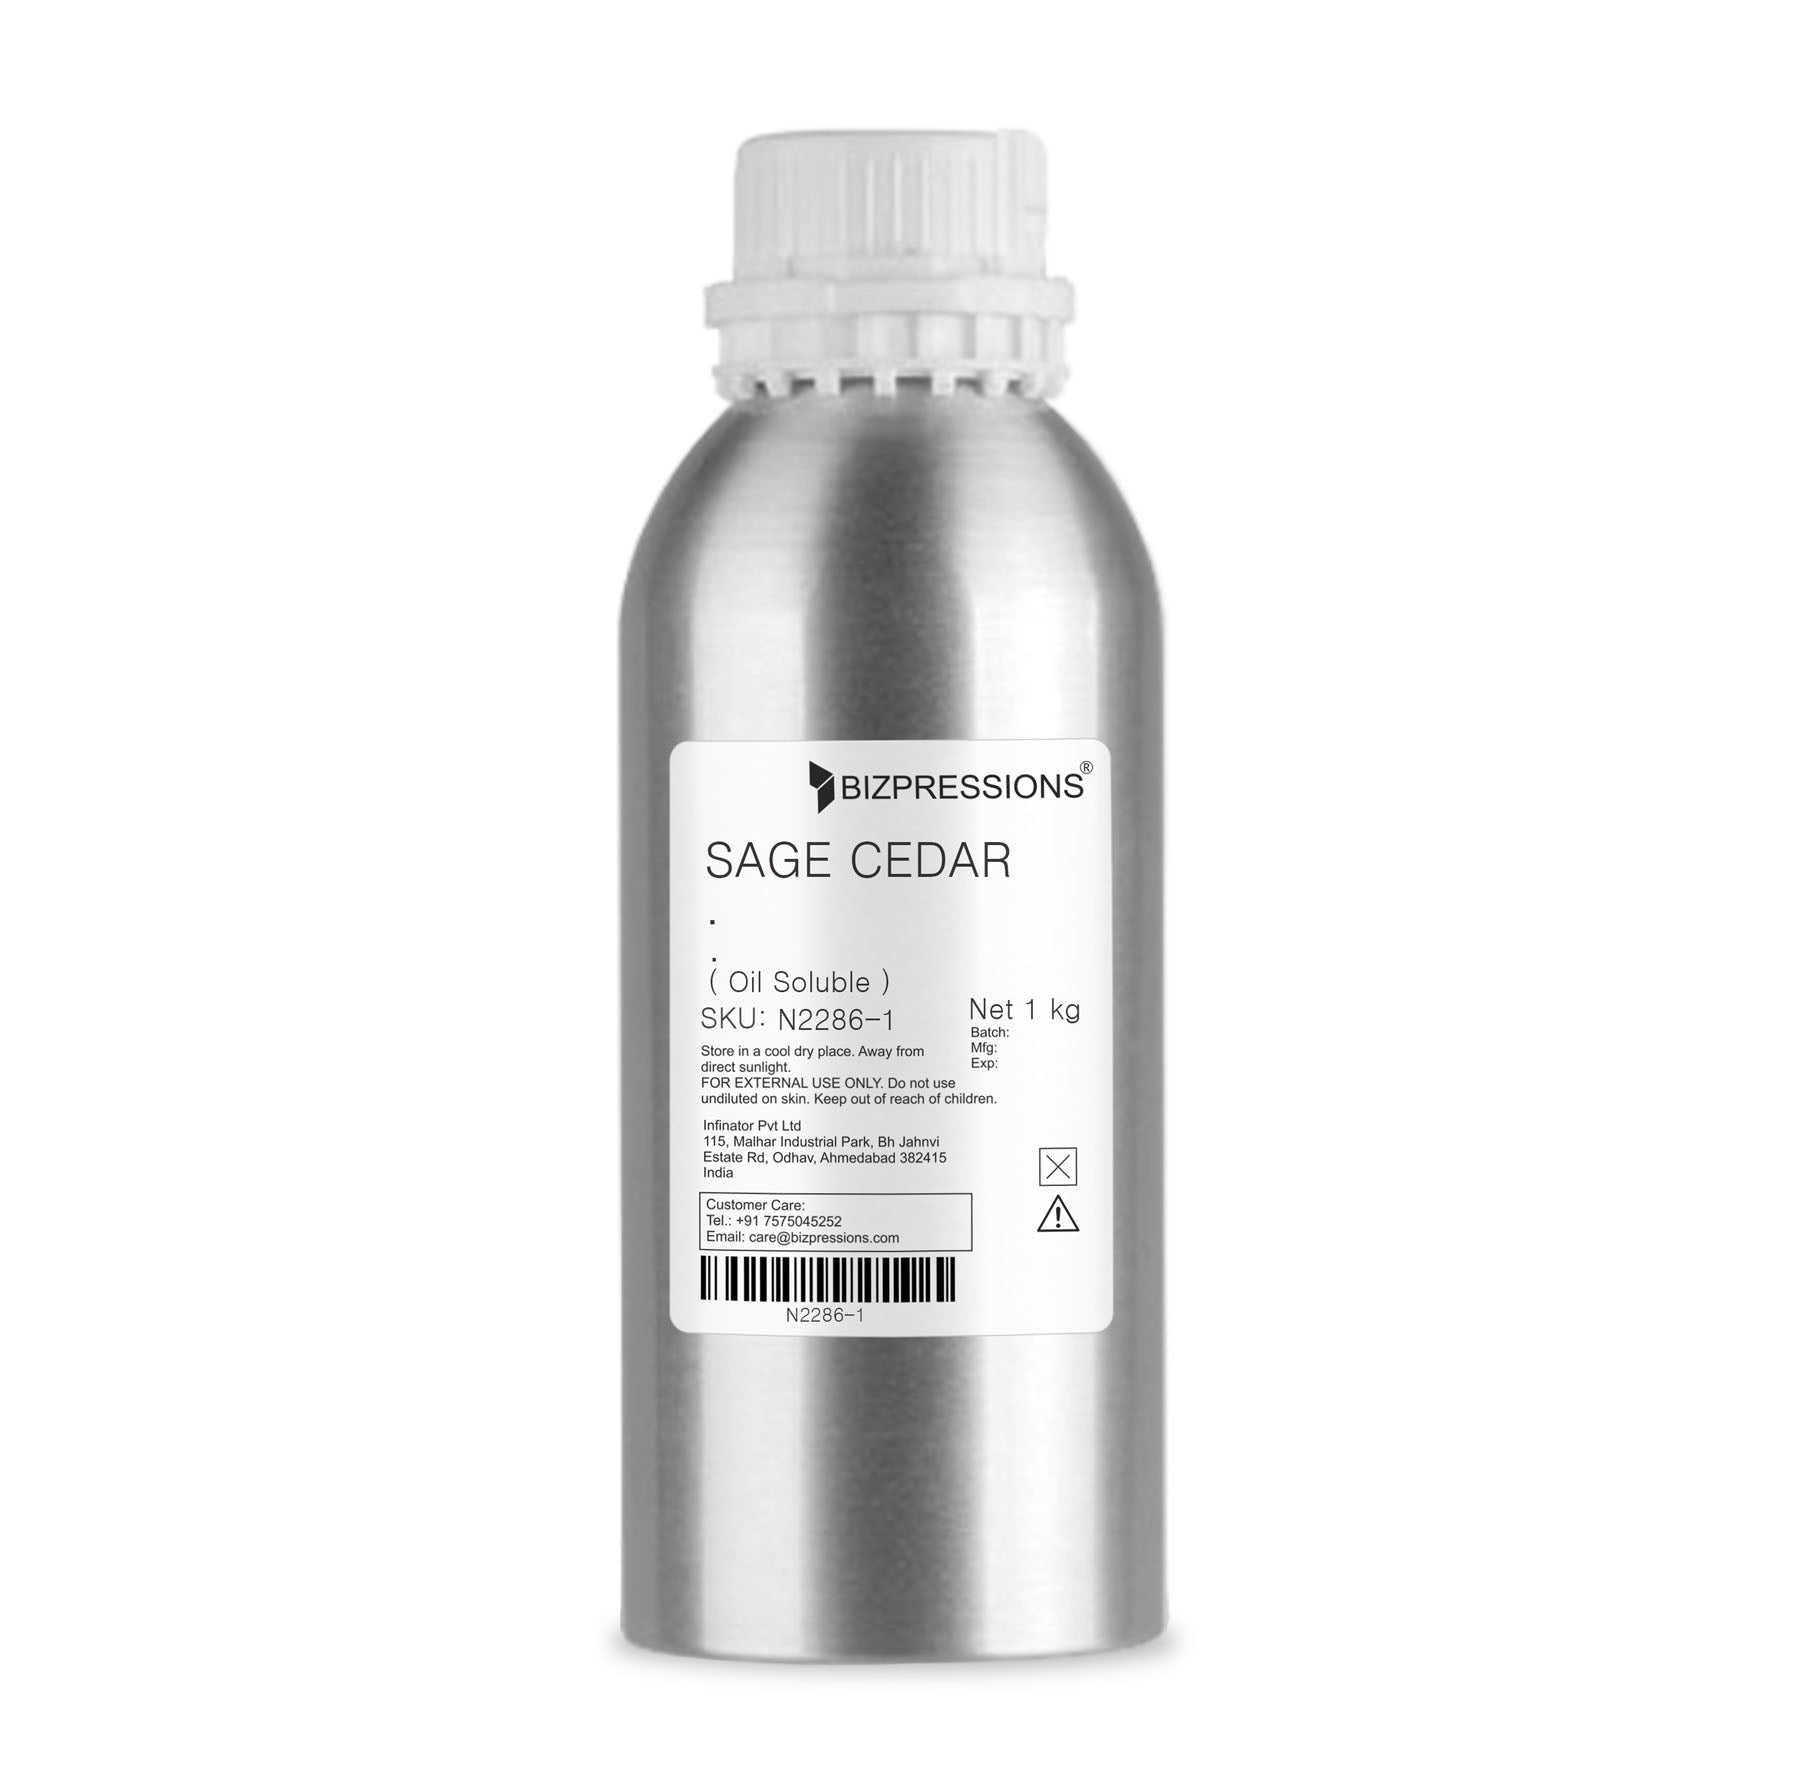 SAGE CEDAR - Fragrance ( Oil Soluble ) - 1 kg